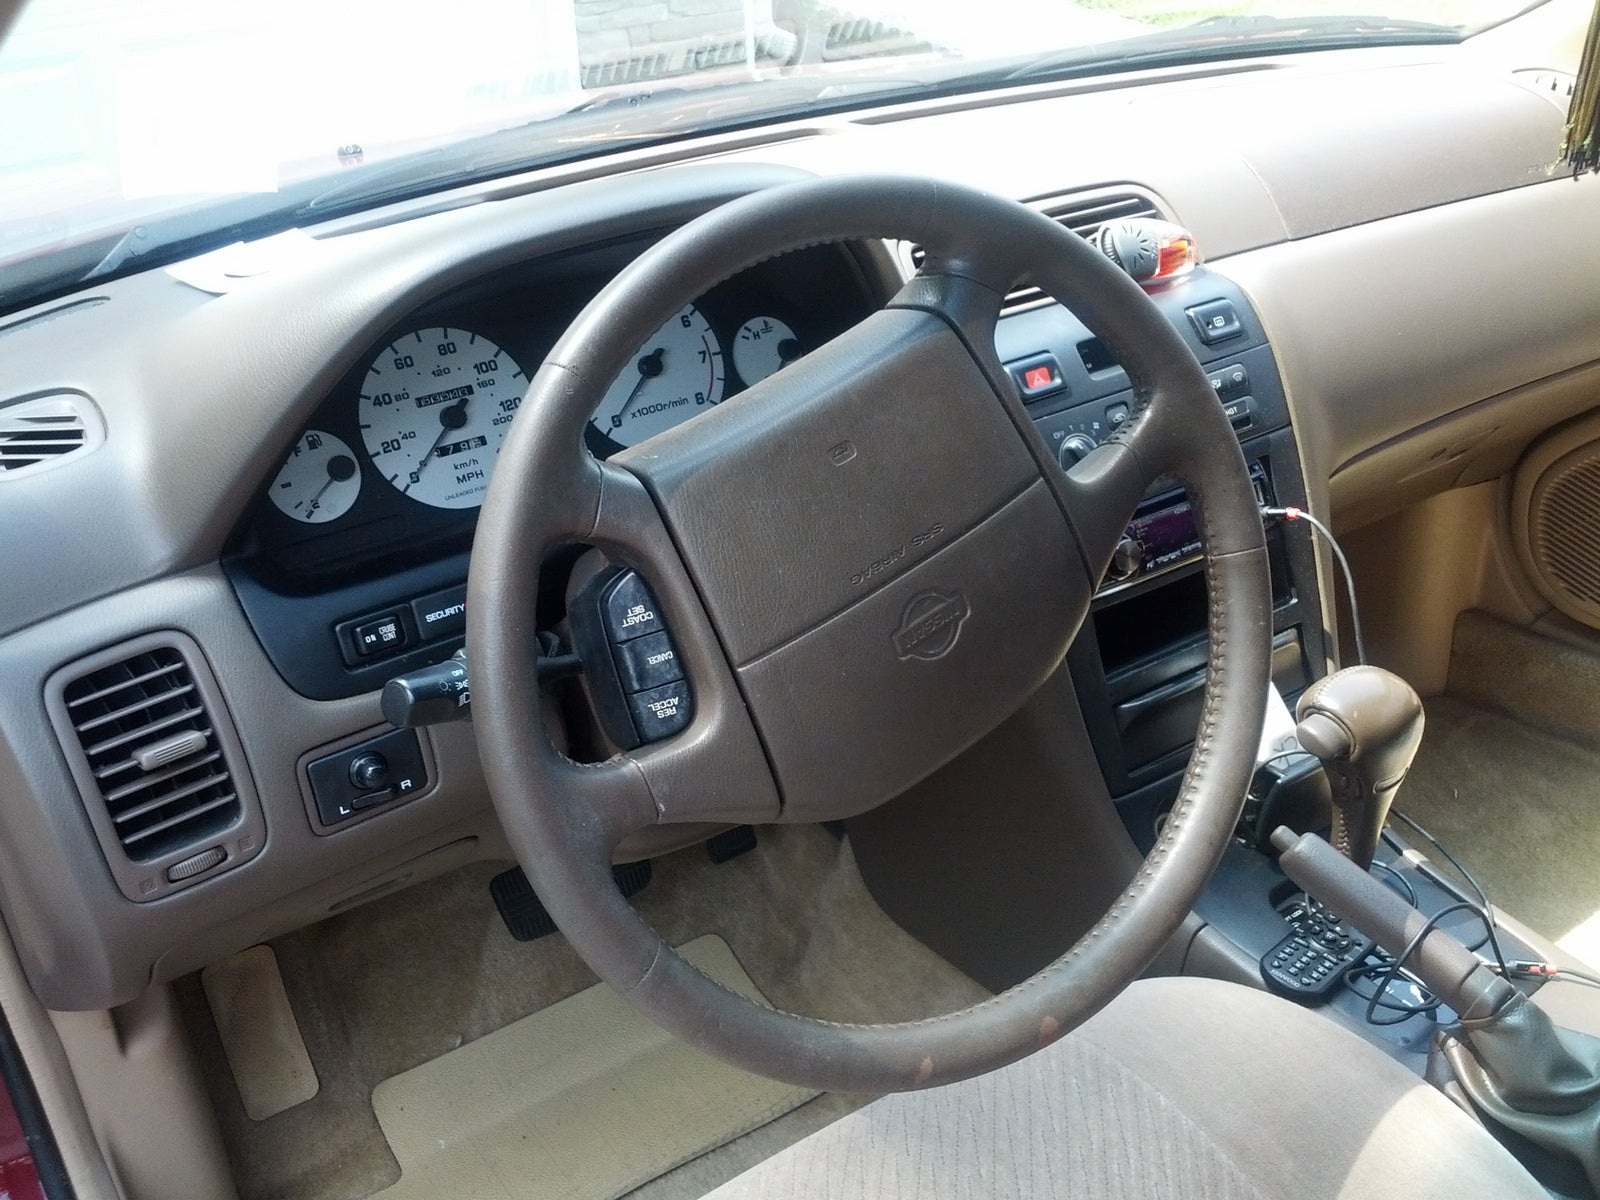 1996 Nissan maxima interior #1